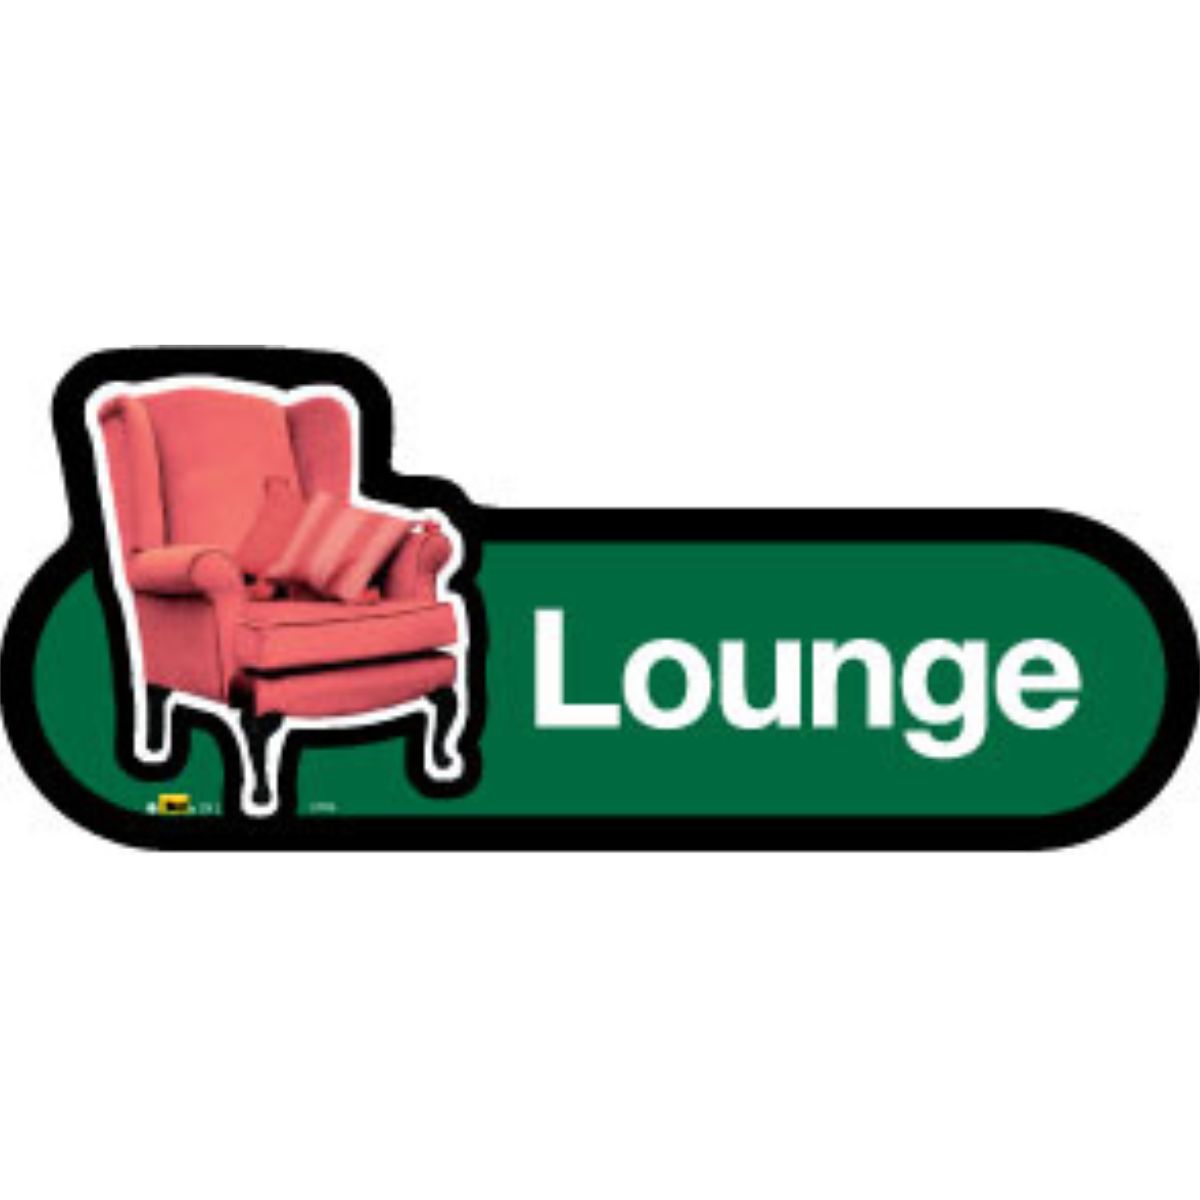 Lounge Sign, 30cm